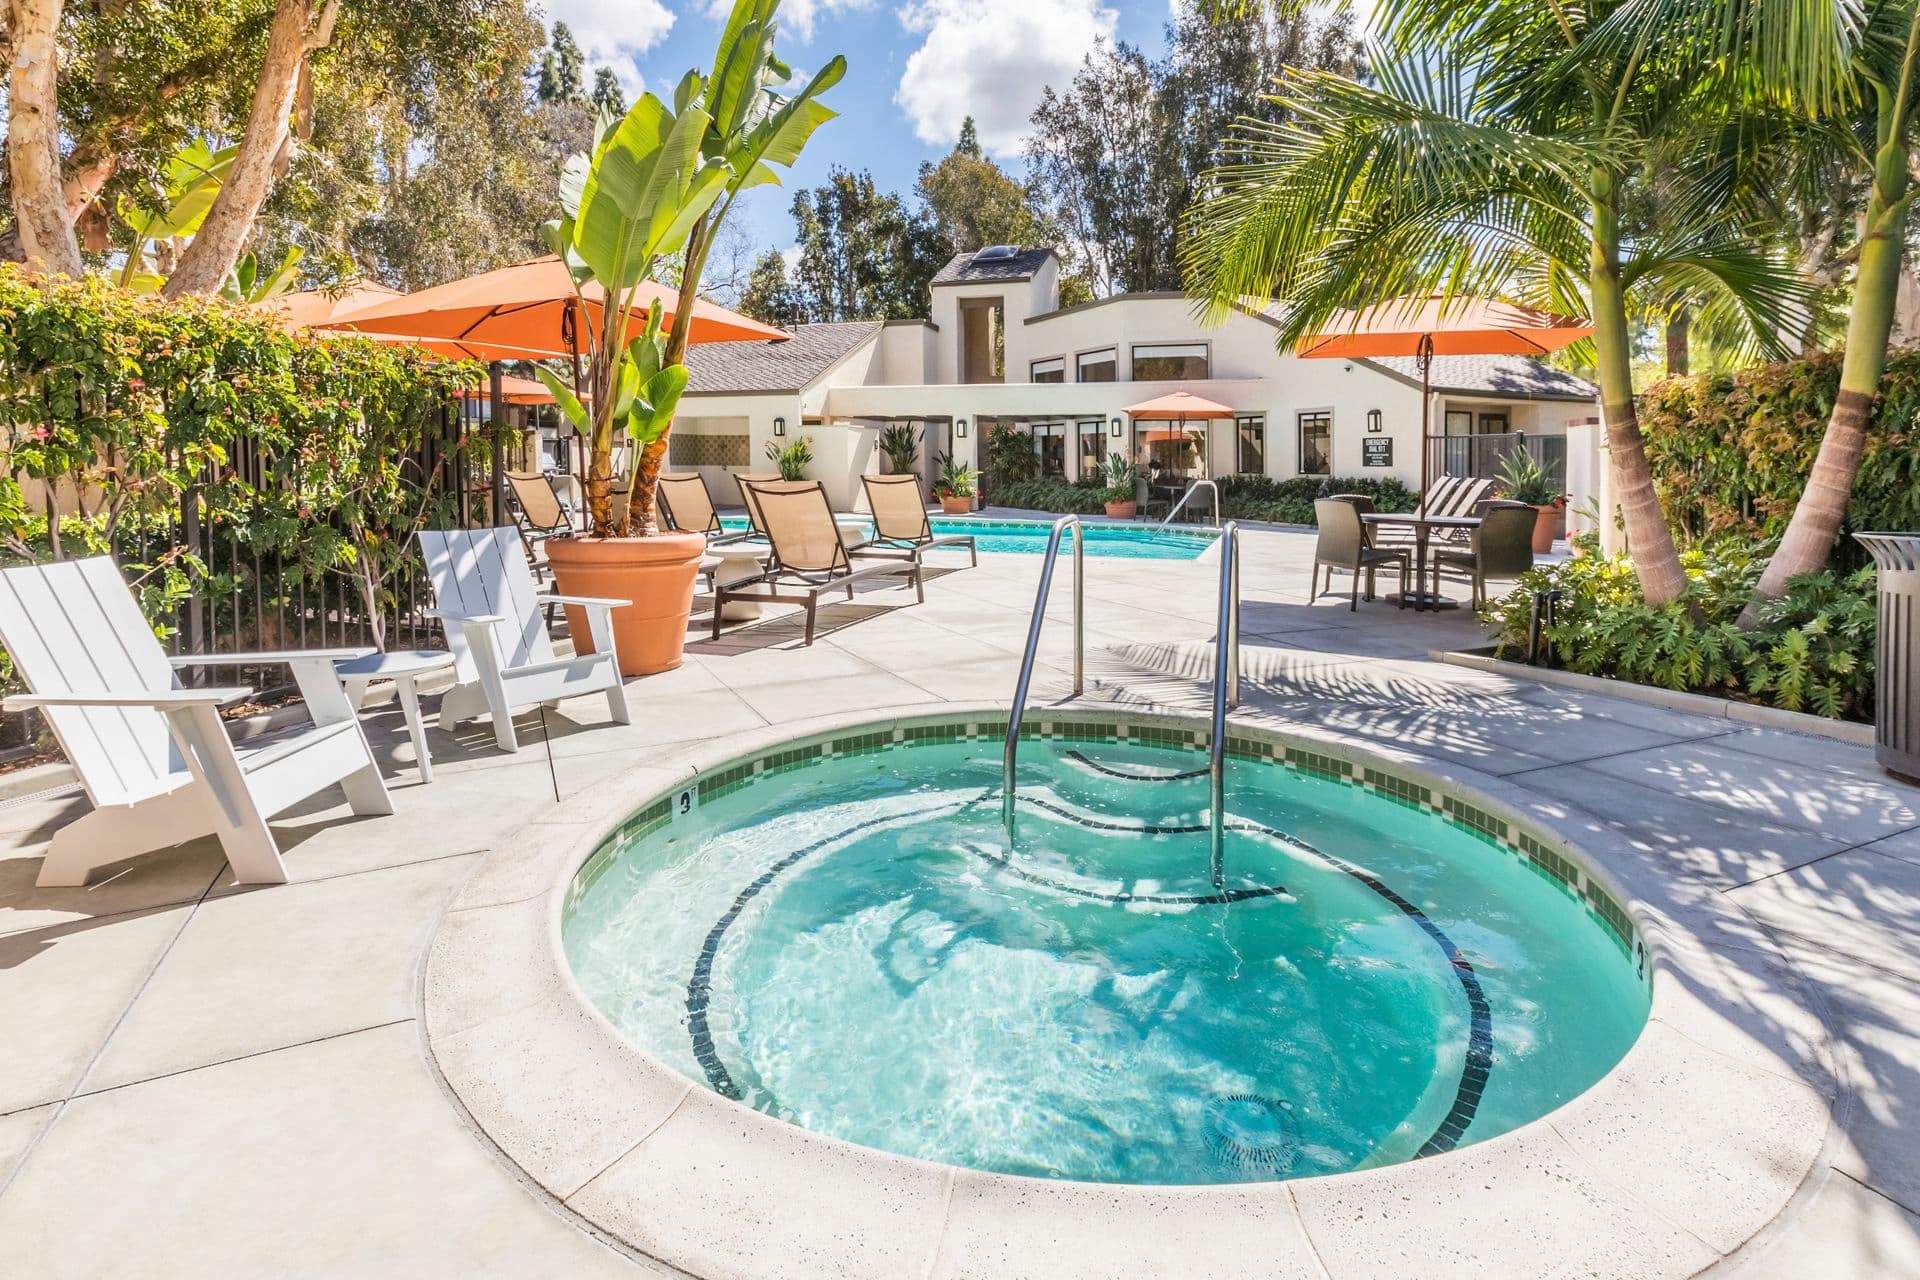 Pool view at Cedar Creek Apartment Homes in Irvine, CA.